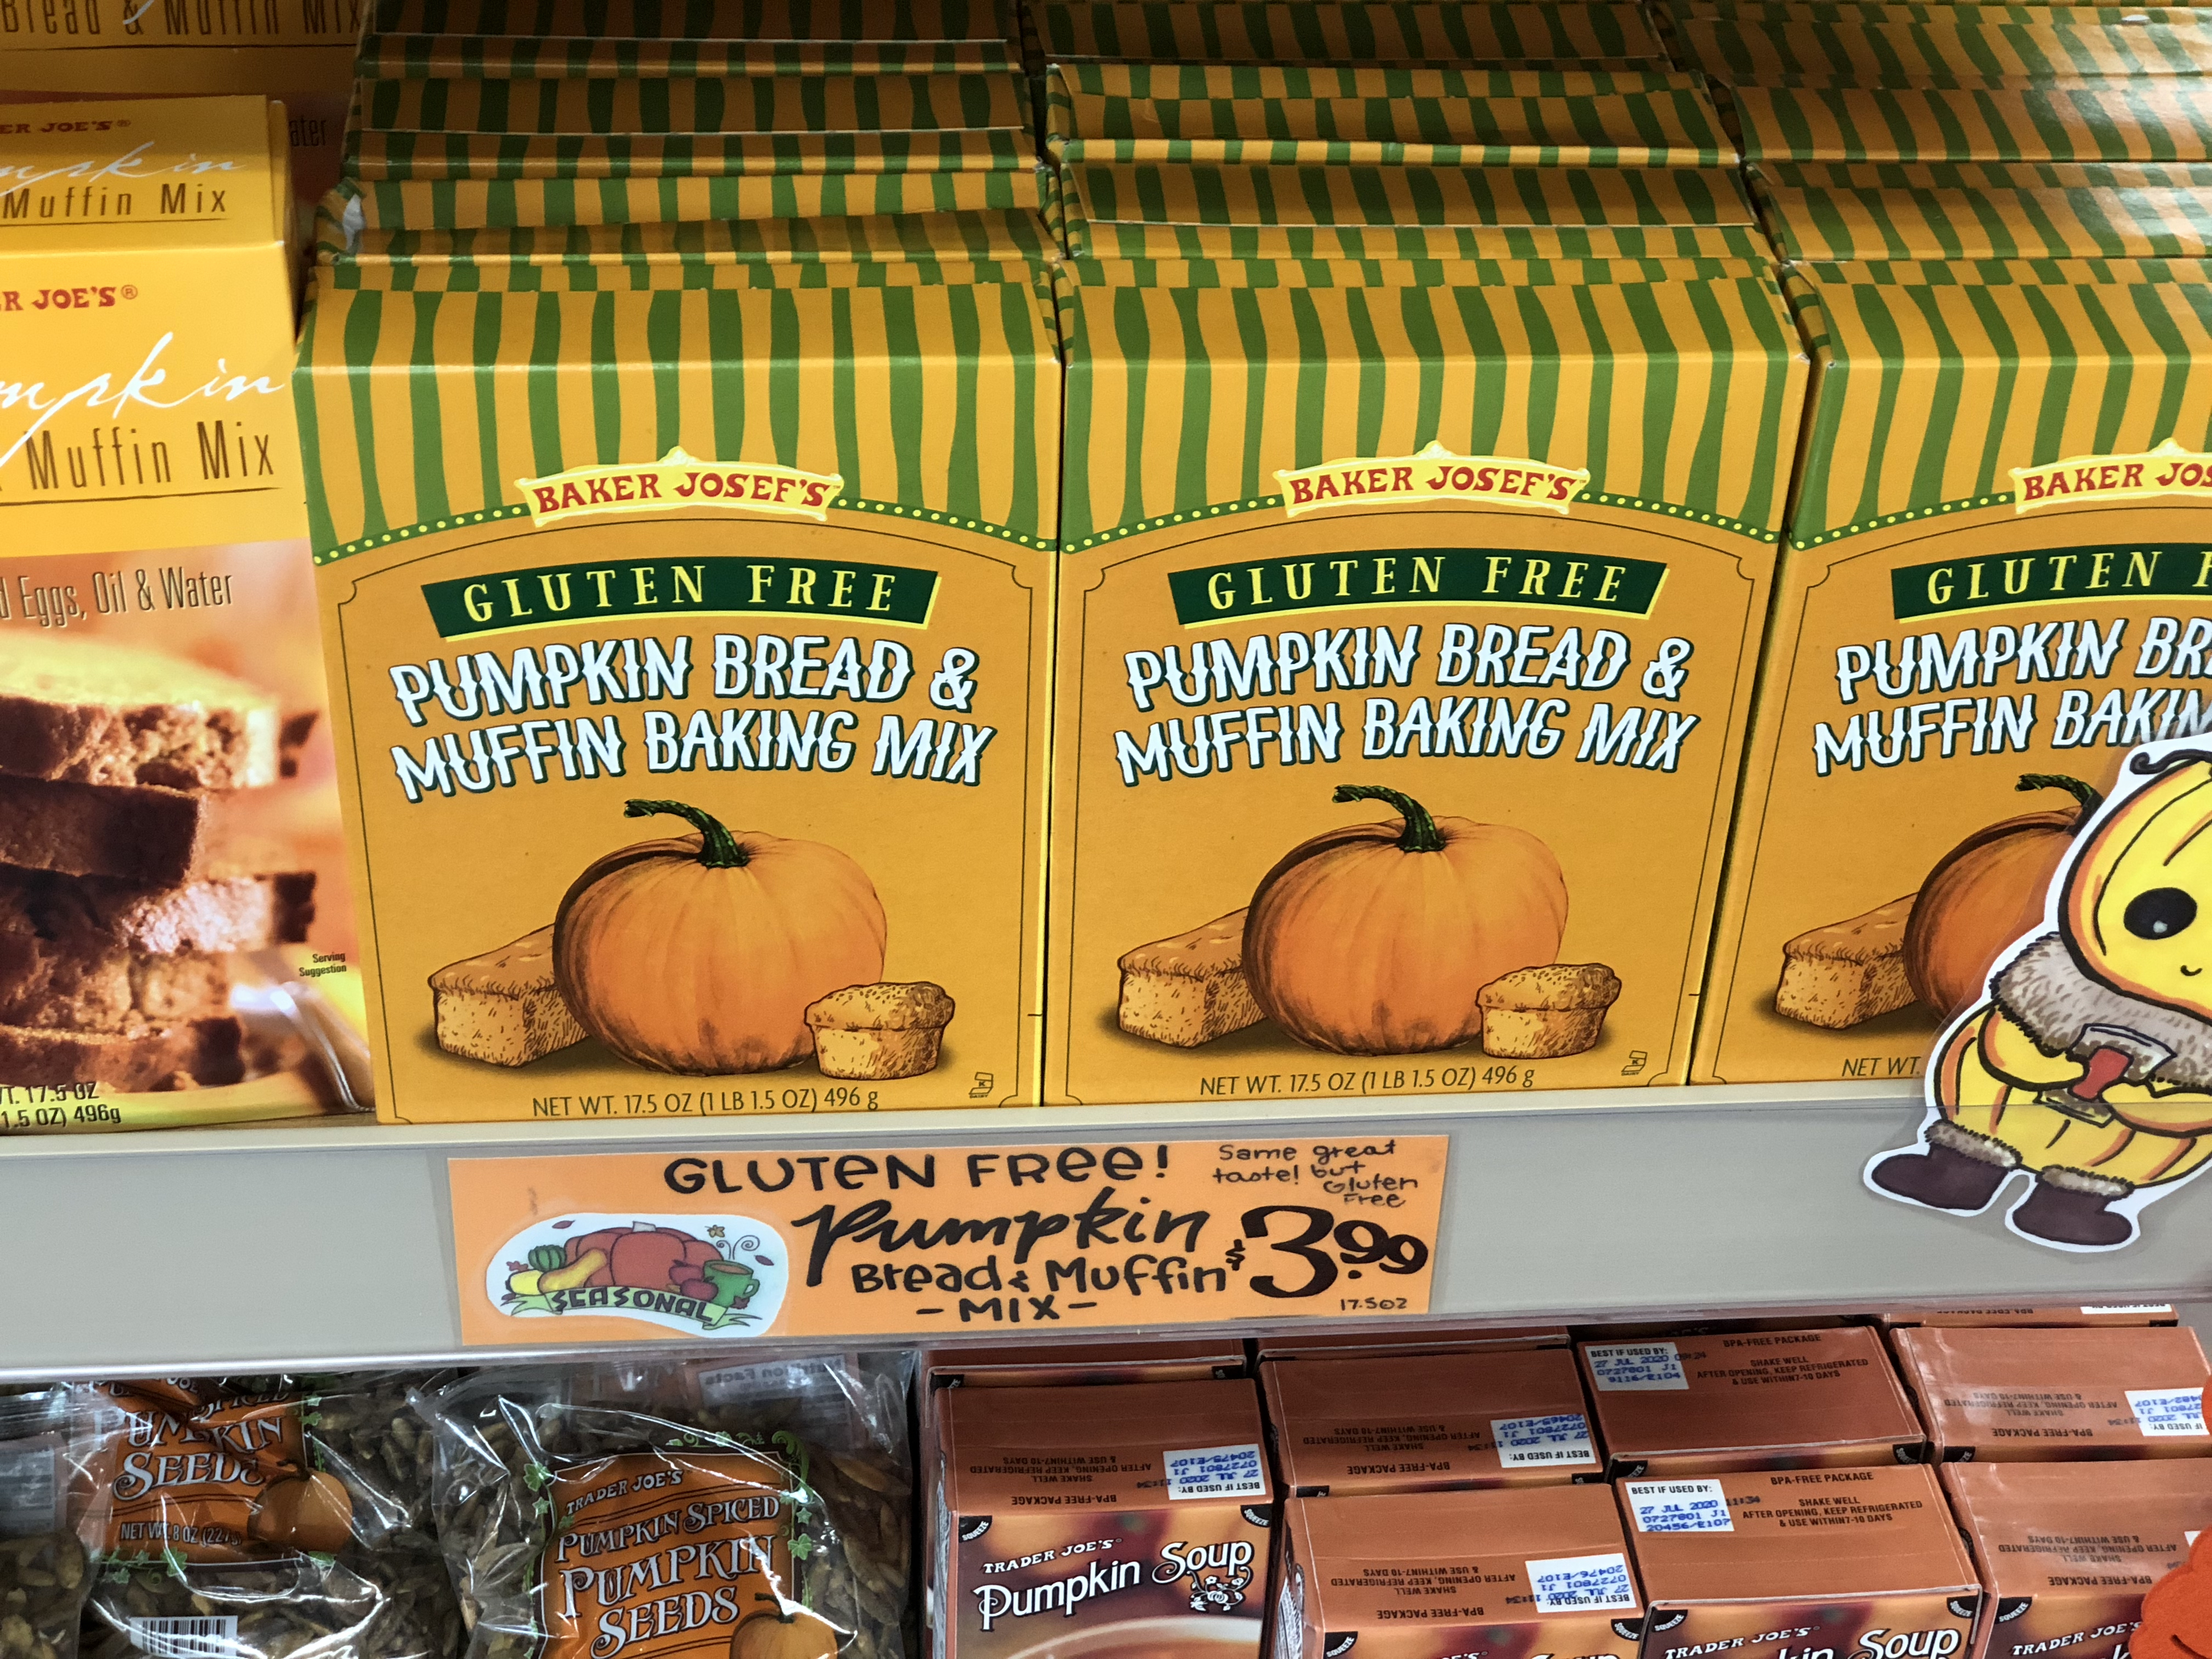 Deals on Trader Joe's Pumpkin items – Gluten free pumpkin bread and muffin mix at Trader Joe's